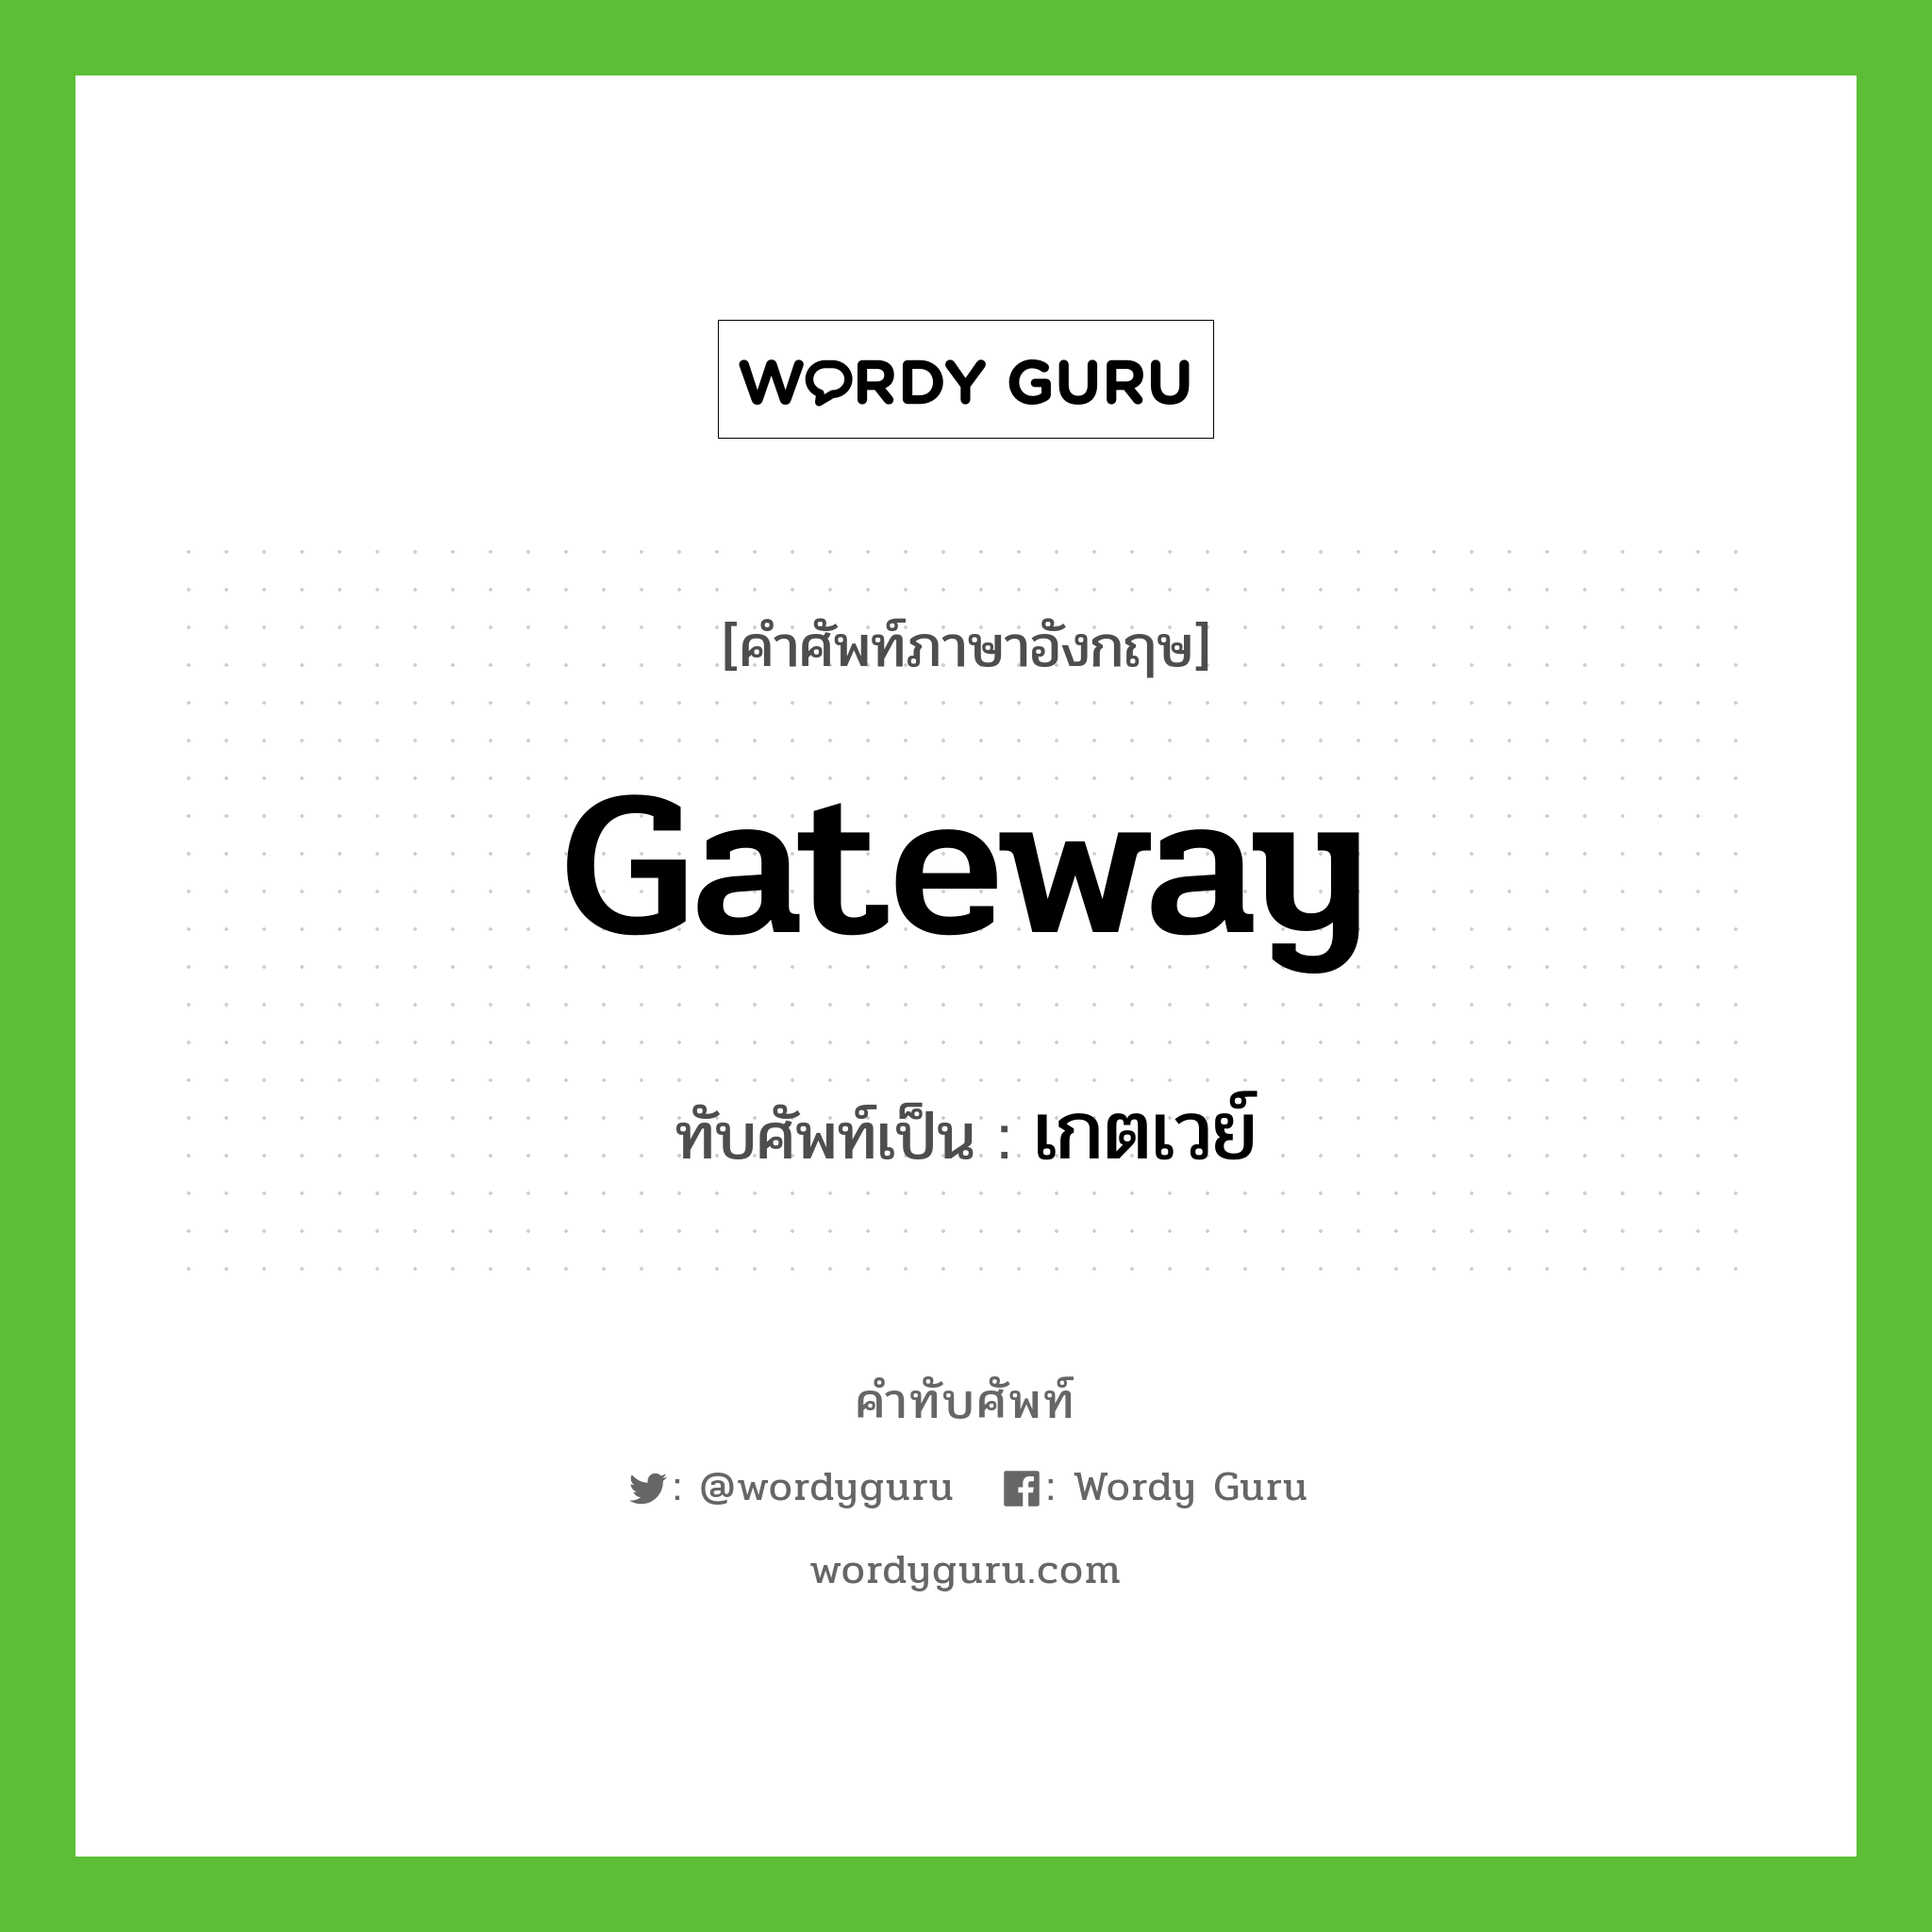 gateway เขียนเป็นคำไทยว่าอะไร?, คำศัพท์ภาษาอังกฤษ gateway ทับศัพท์เป็น เกตเวย์